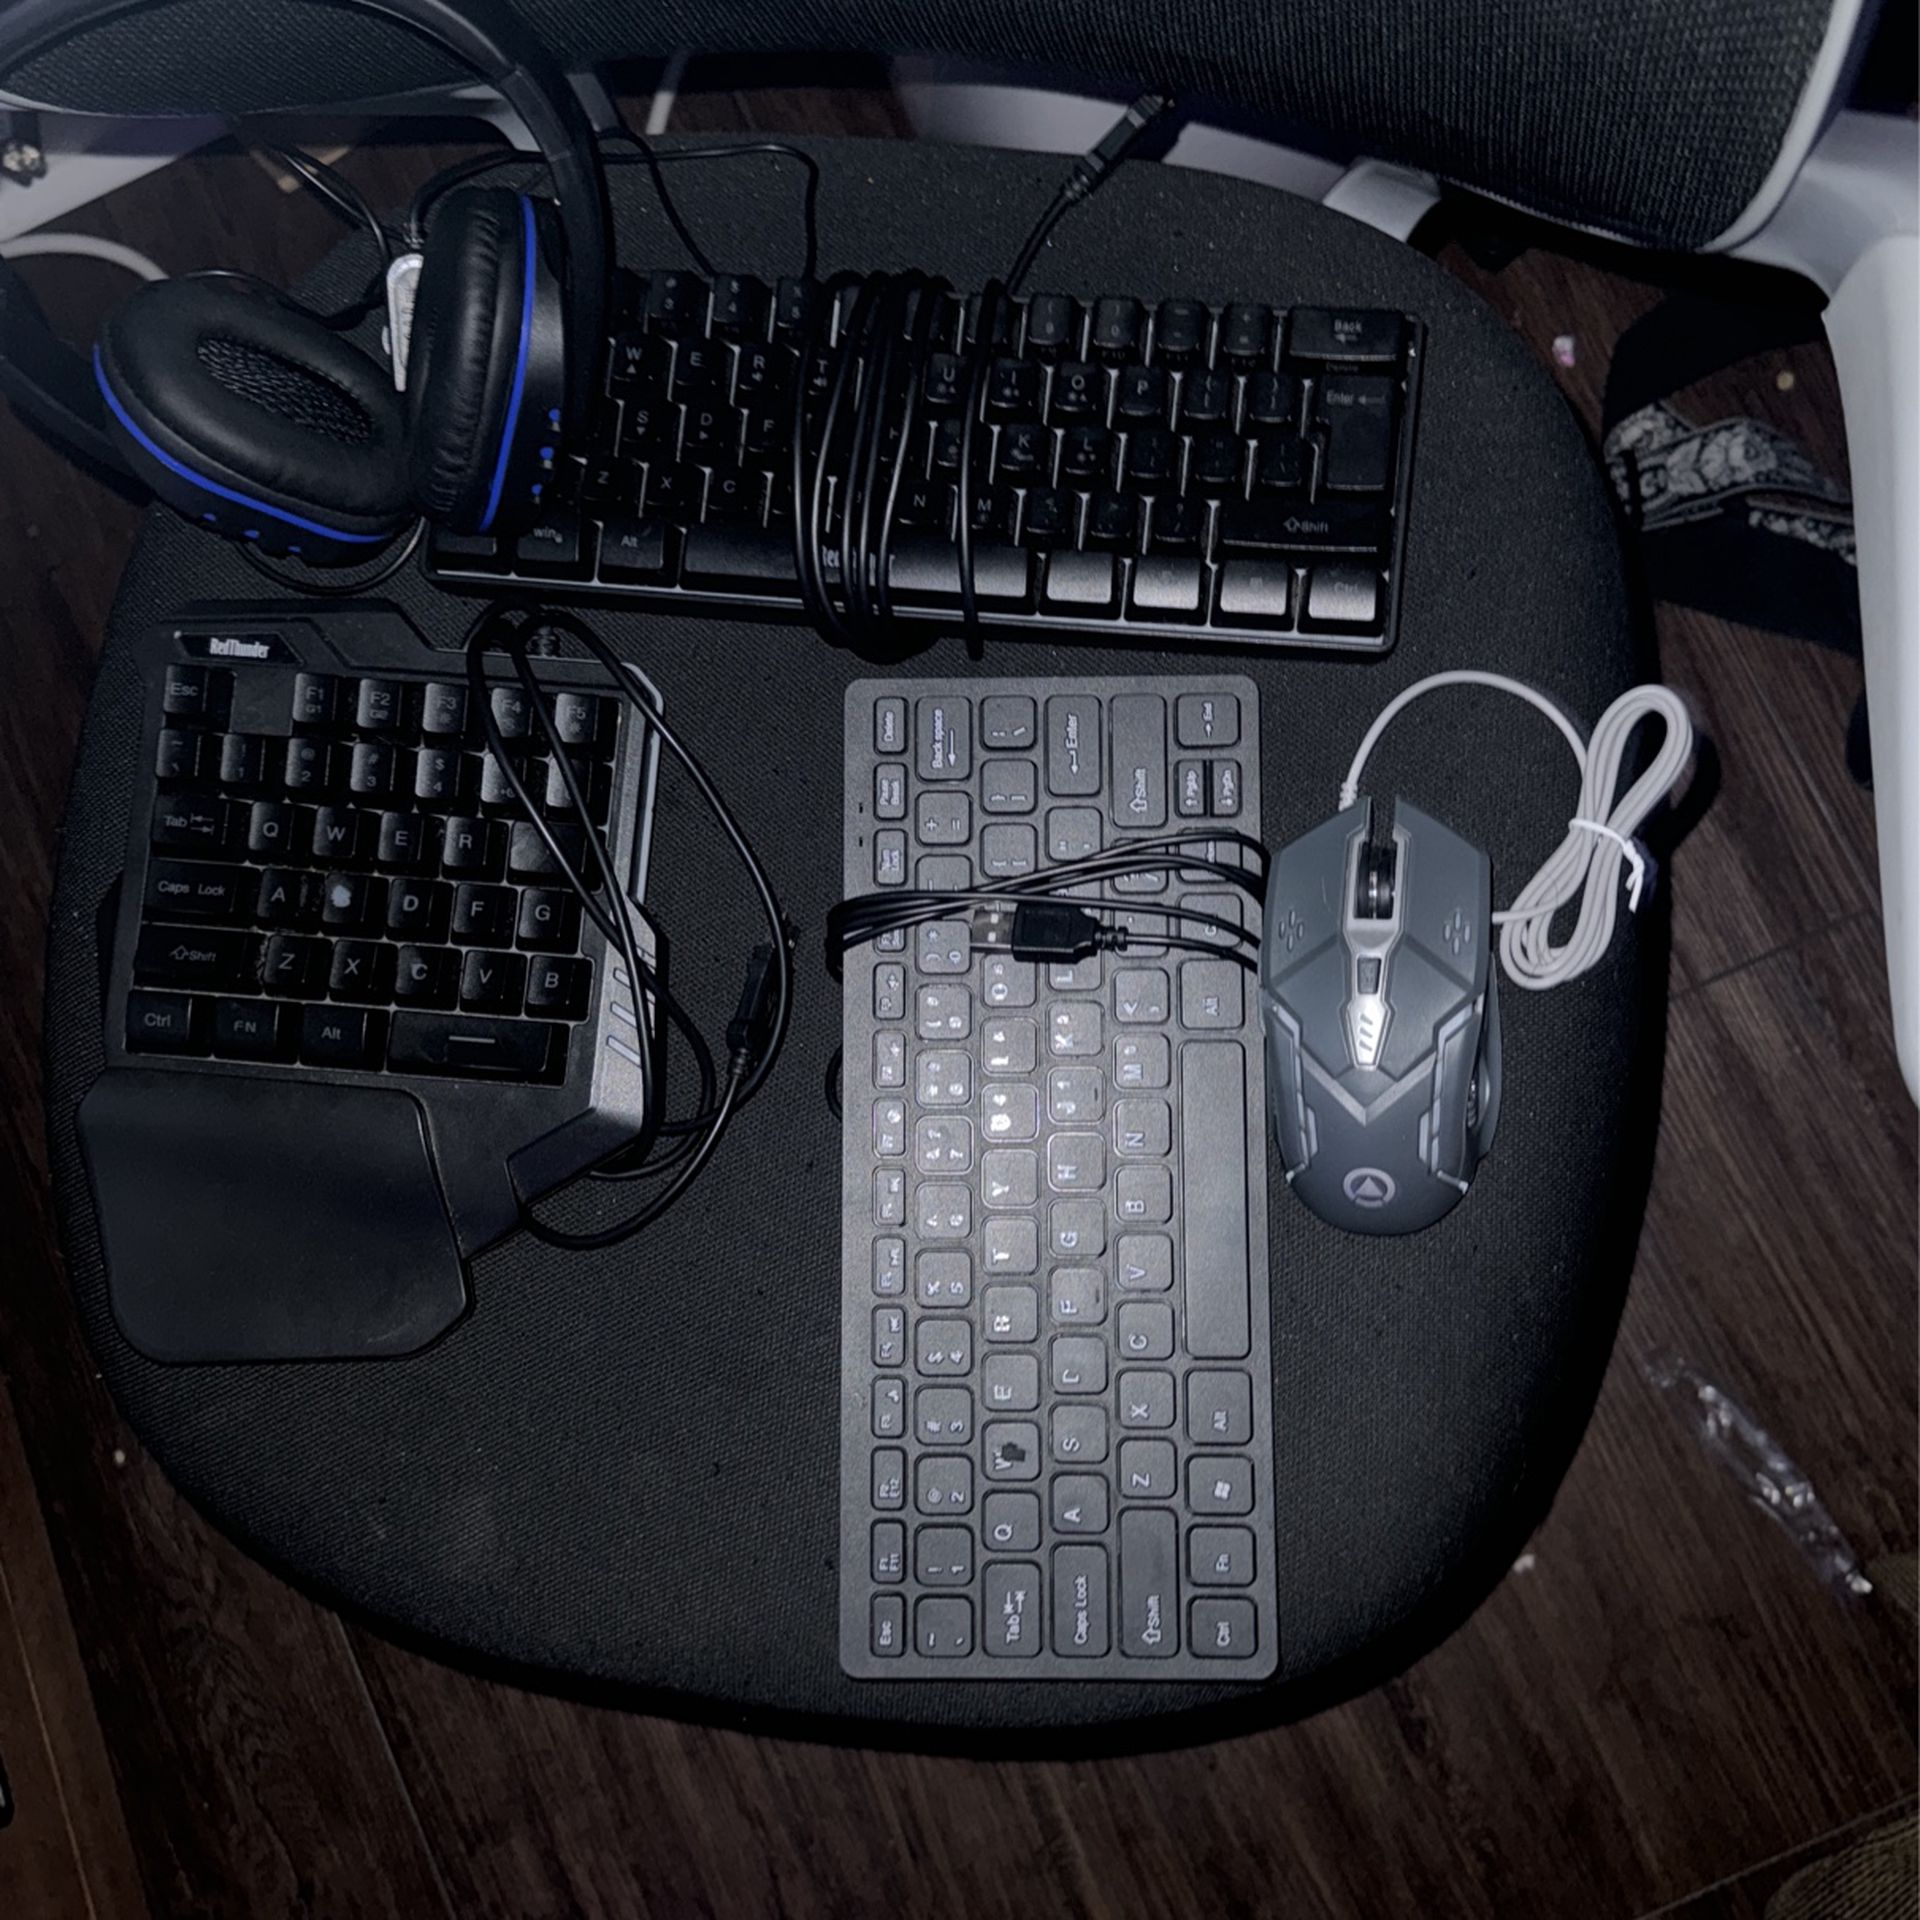 2 RedThunder Keyboards, G5 Keyboard & Mouse Set, Headphones